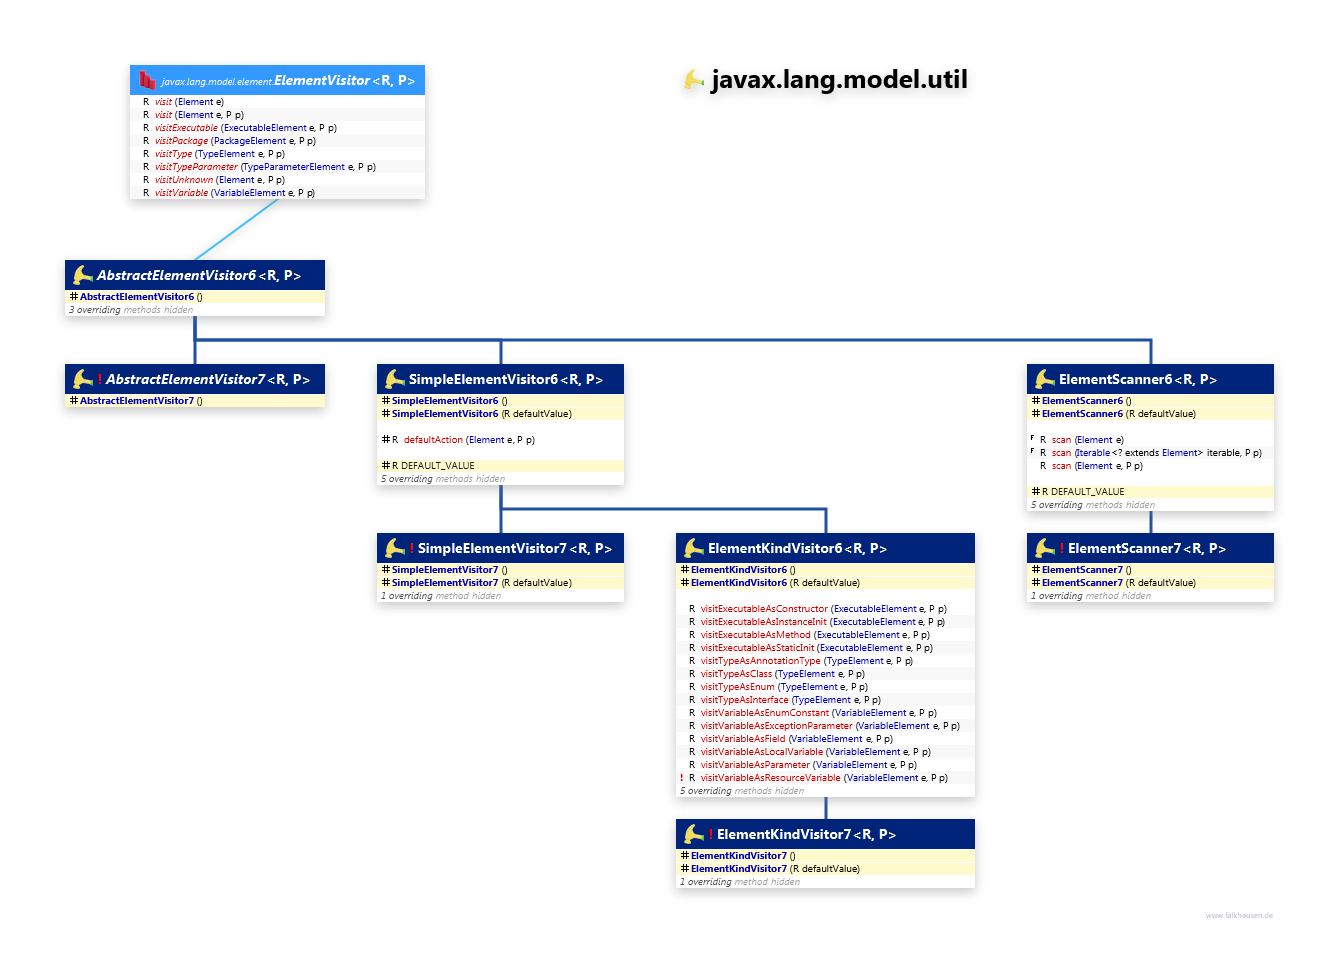 javax.lang.model.util ElementVisitor class diagram and api documentation for Java 7